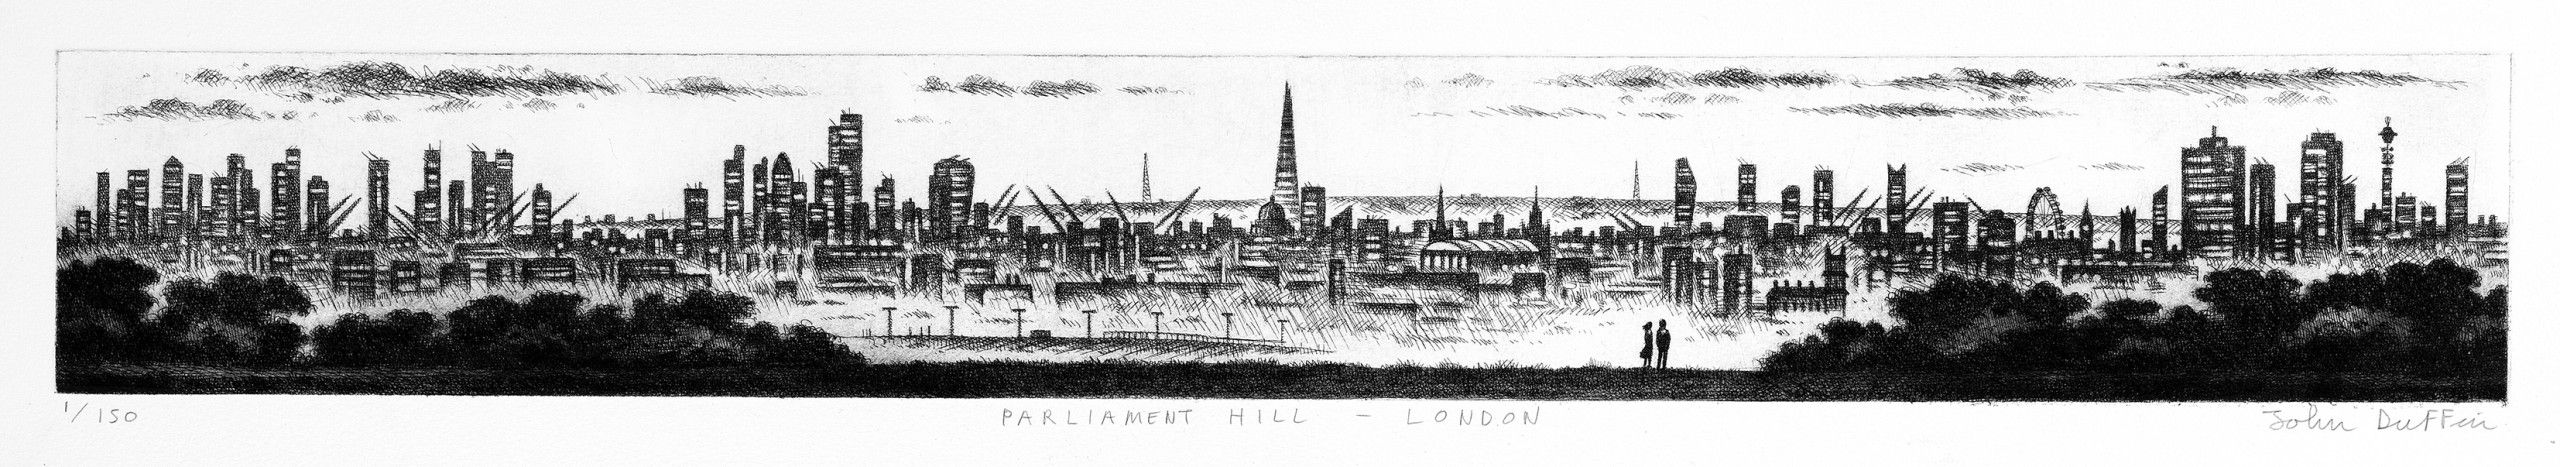 Parliament Hill - London by John Duffin